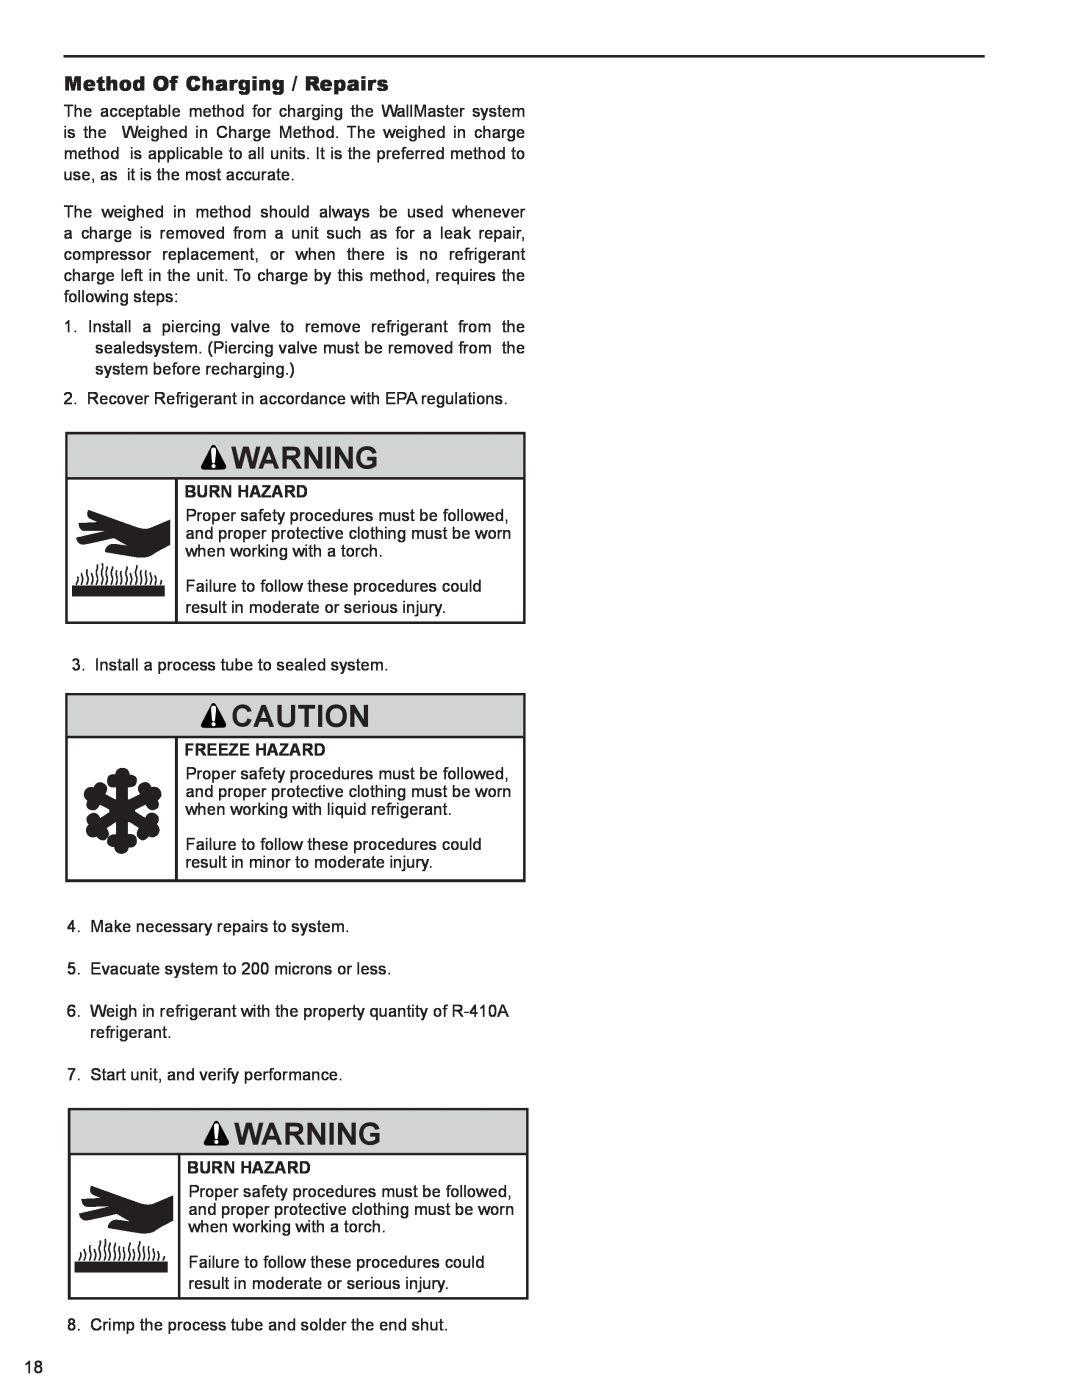 Friedrich WS10B10 service manual Method Of Charging / Repairs, Burn Hazard, Freeze Hazard 